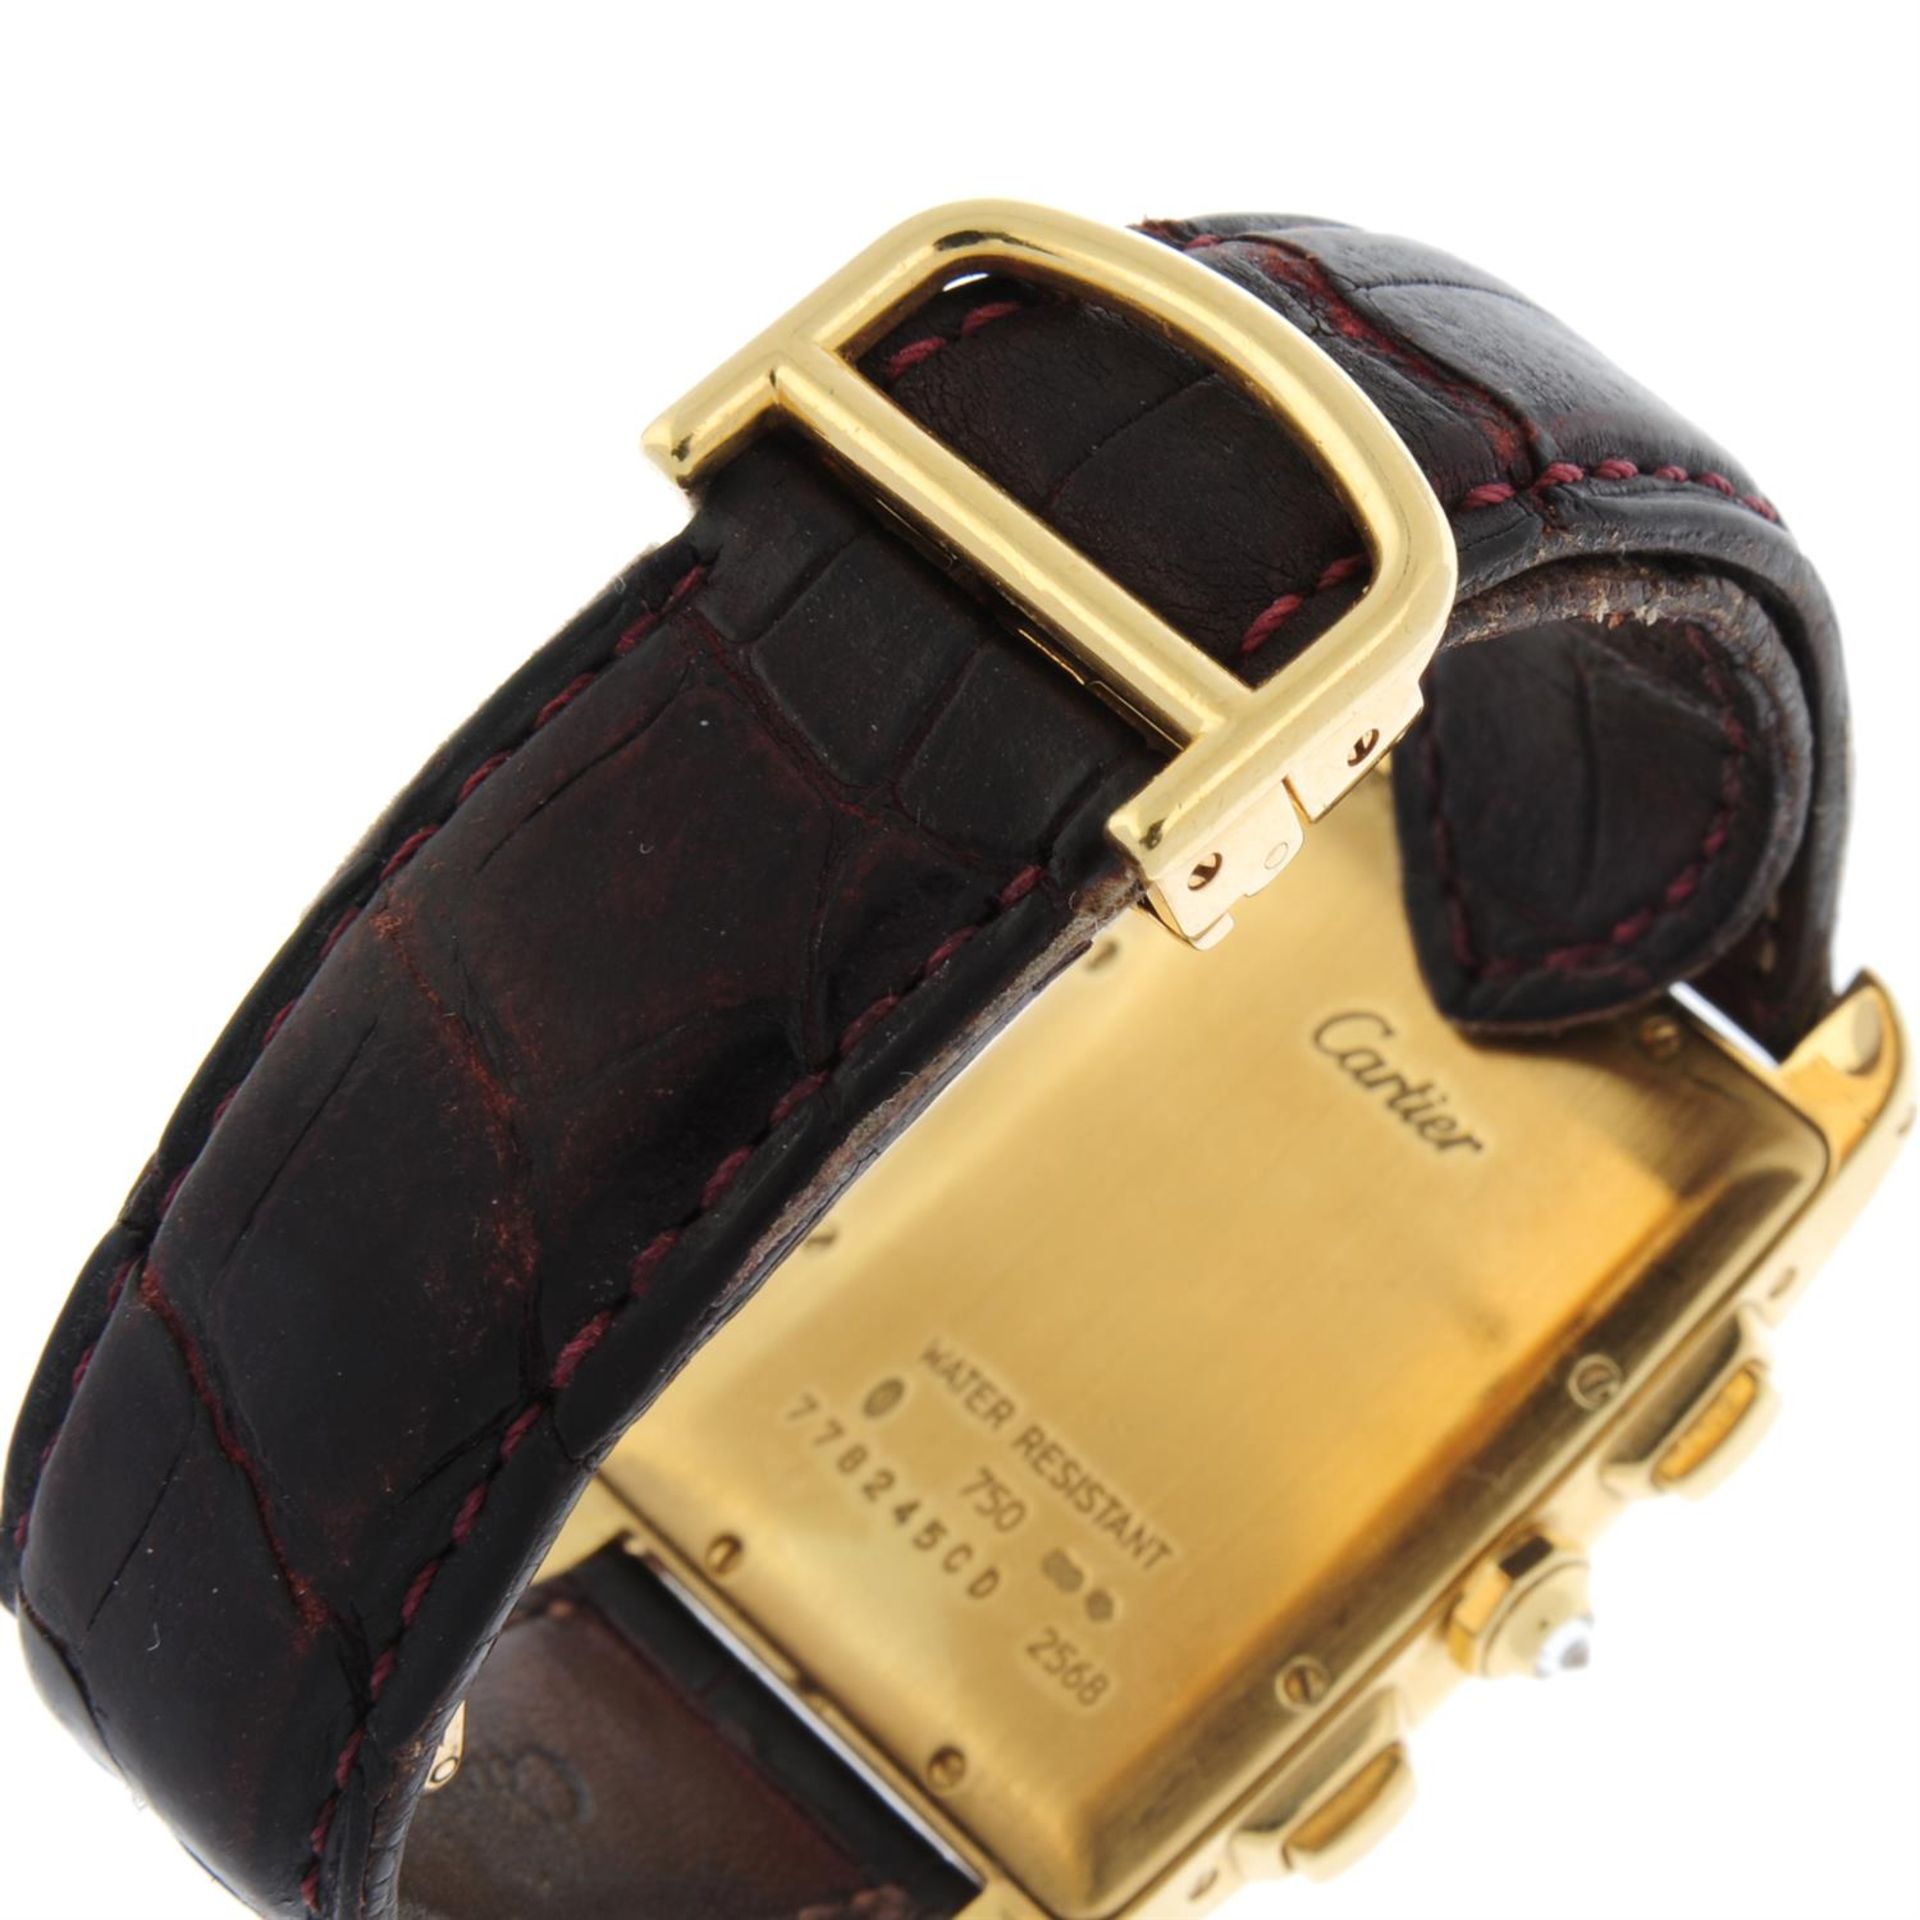 CARTIER - a factory diamond set 18ct gold Tank Américaine chronograph wrist watch, 27x37mm. - Image 2 of 5